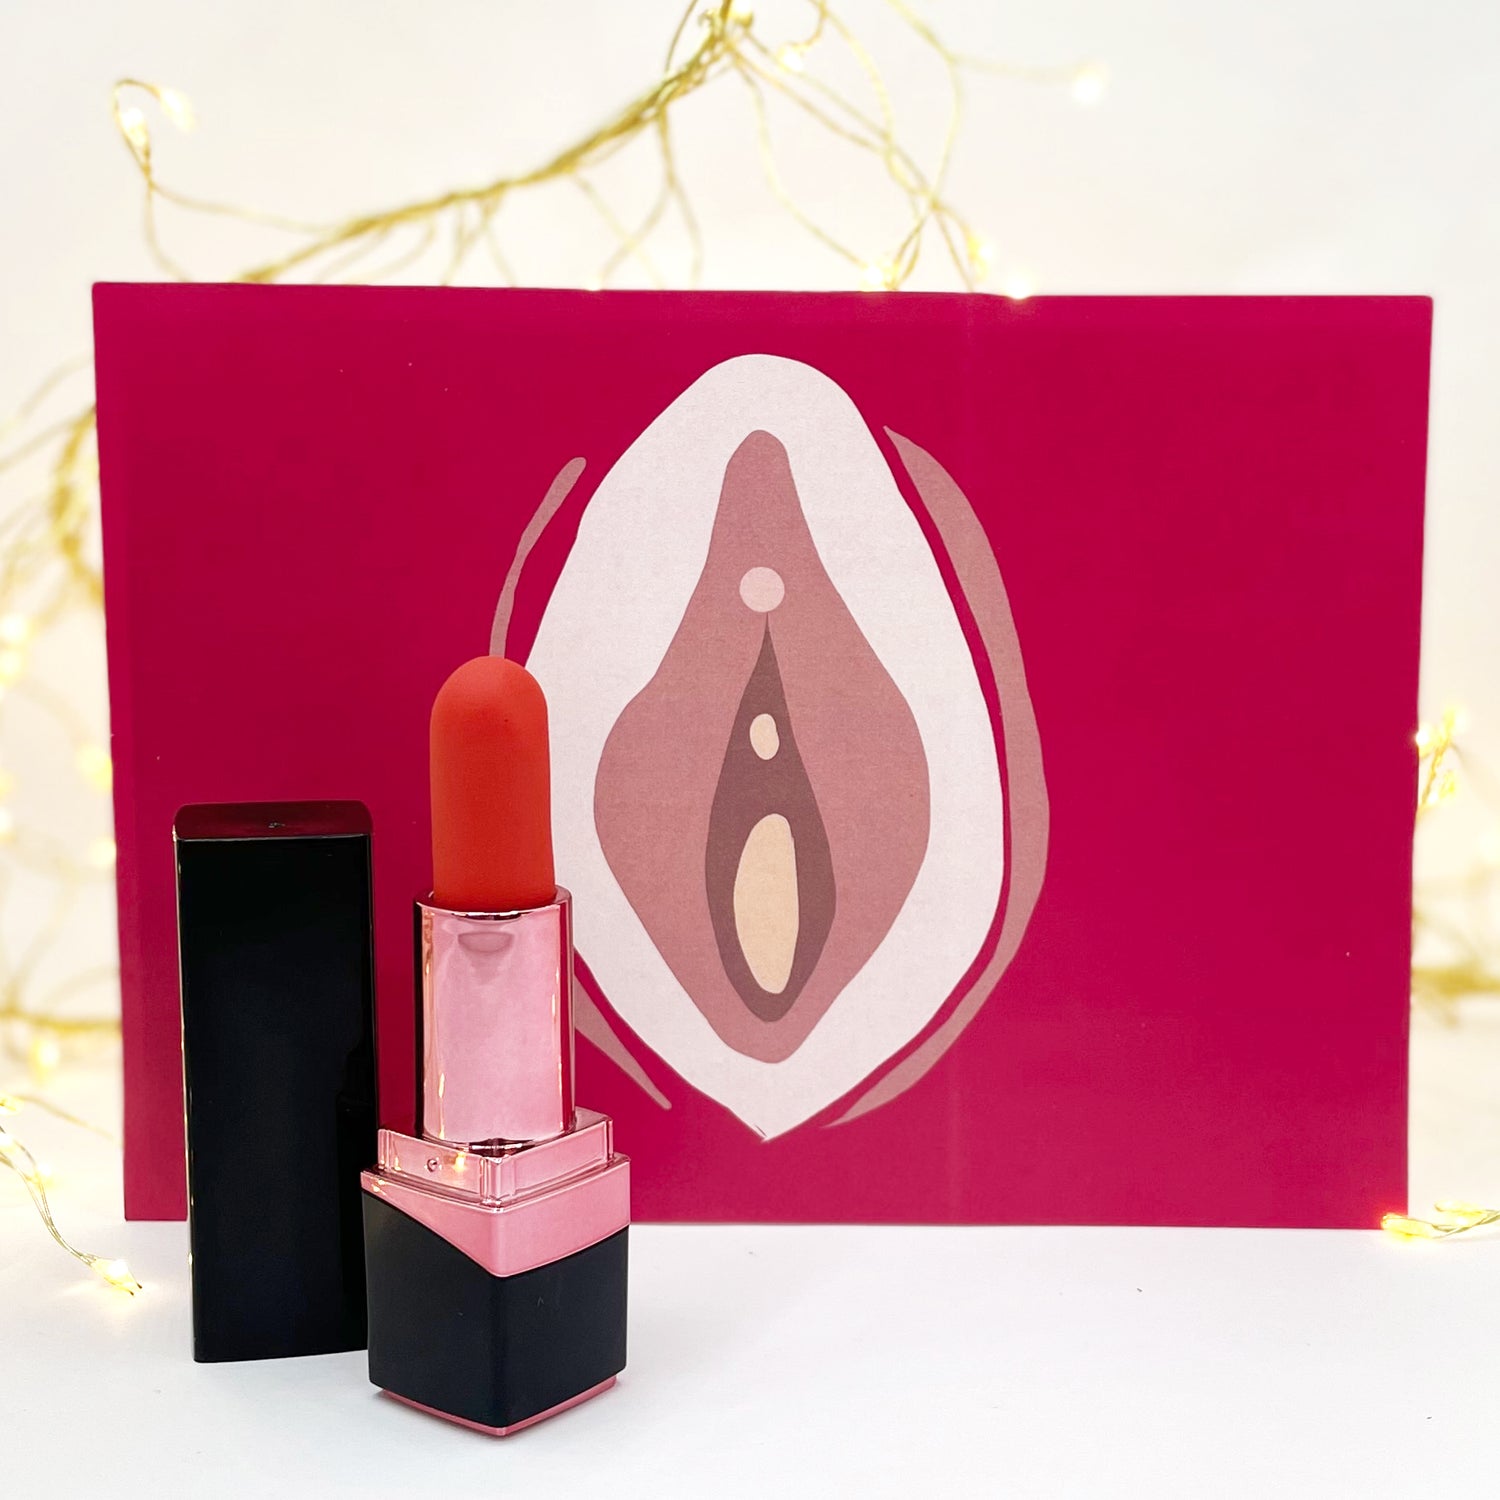 Clitoris and vulva illustration with clitoral lipstick vibrator - Sh! Women's Store